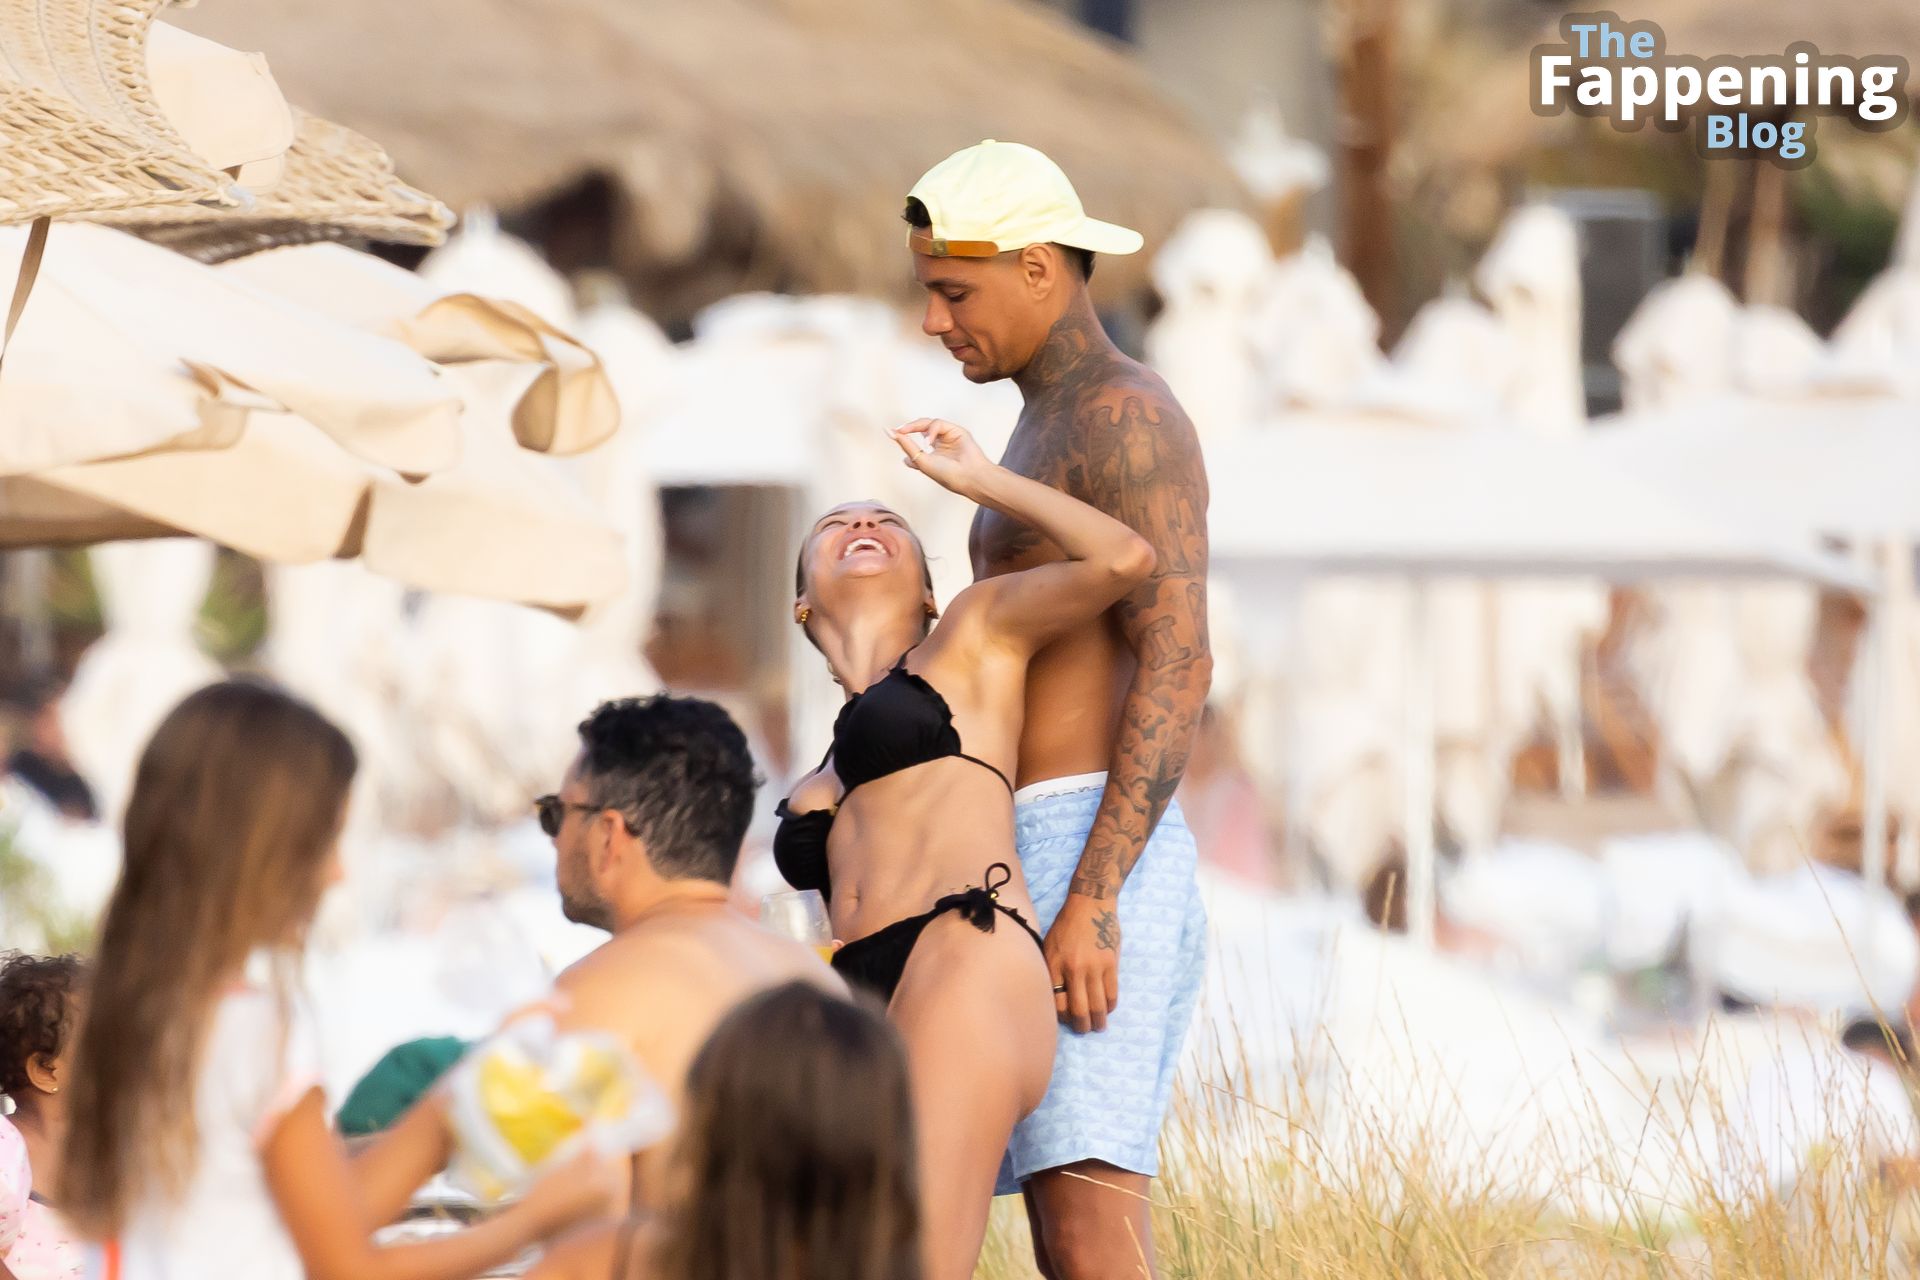 Rose Bertram Enjoys Her Vacation in Ibiza (59 Photos)